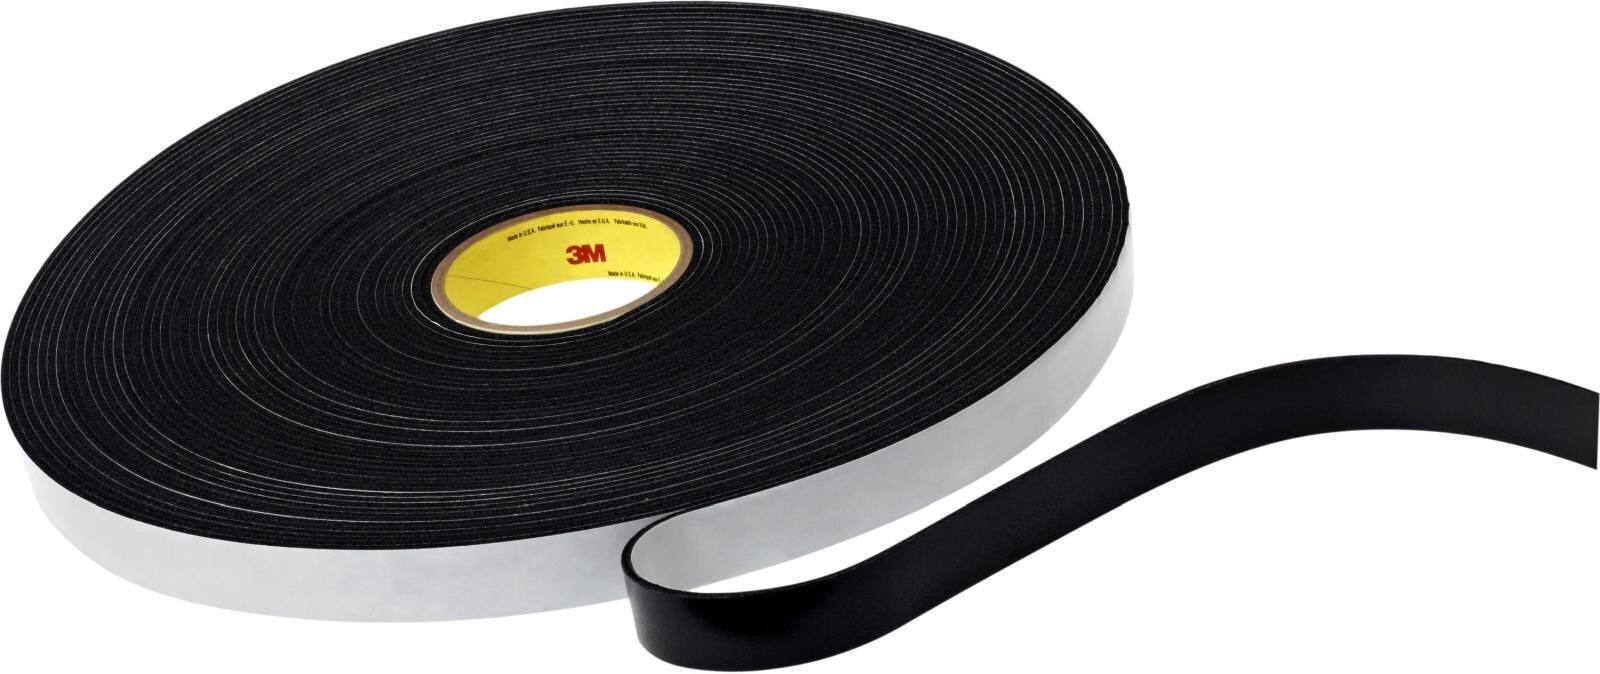 3M Single-sided vinyl foam adhesive tape 4508, black, 25 mm x 33 m, 3.2 mm